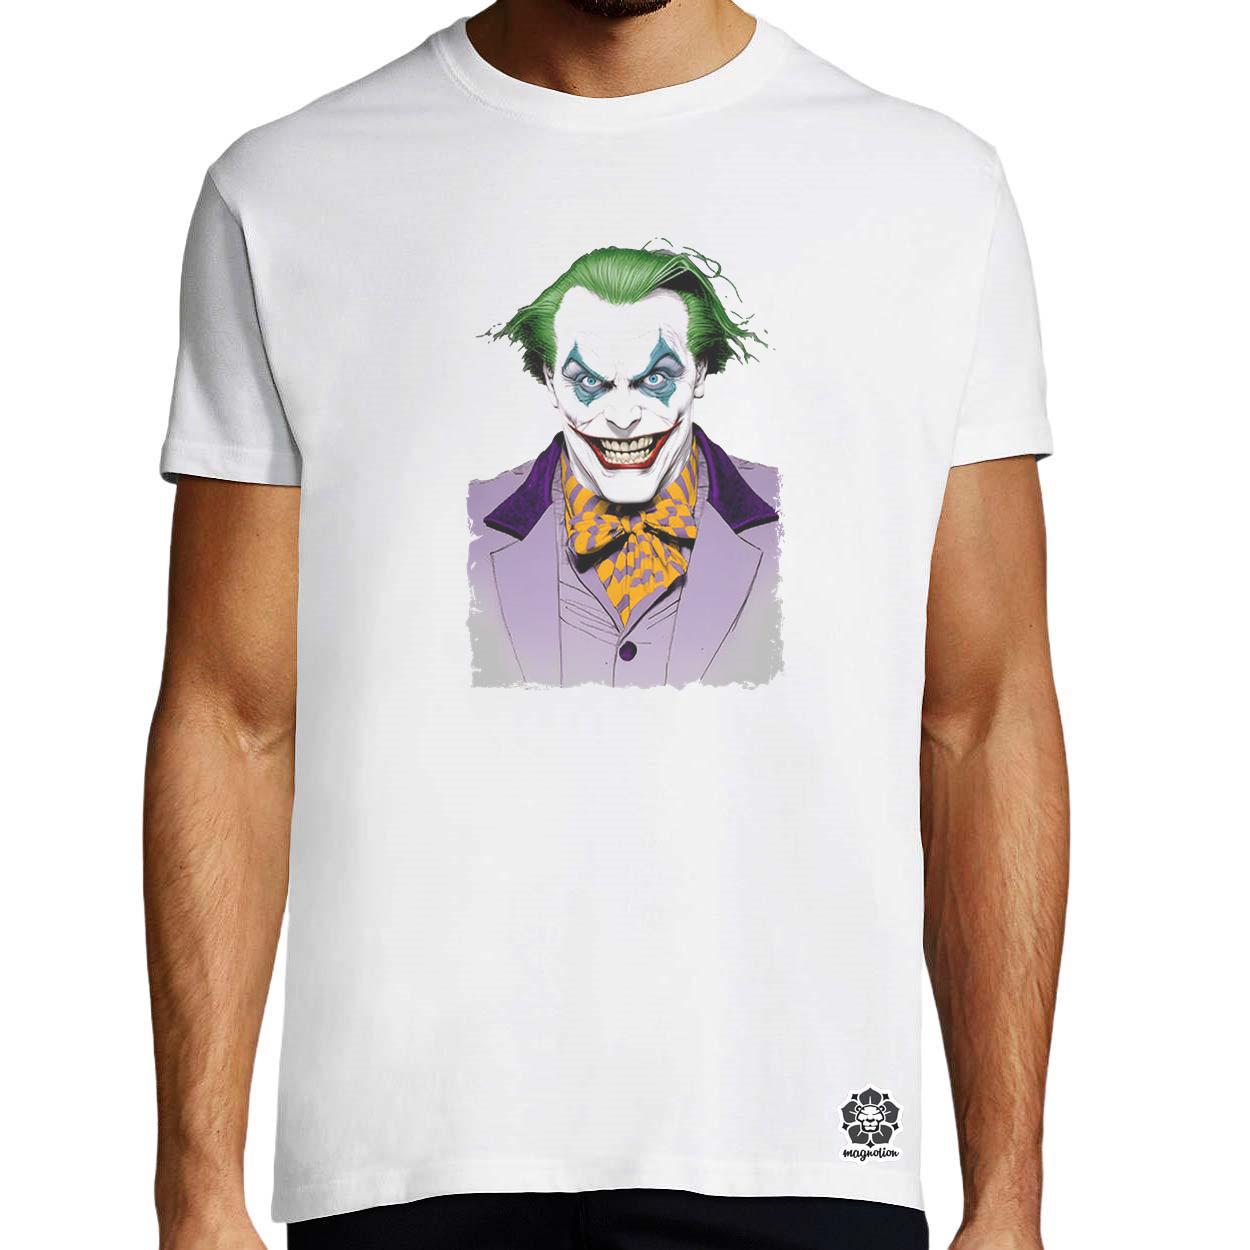 Joker Jack Nicholson fanart v2